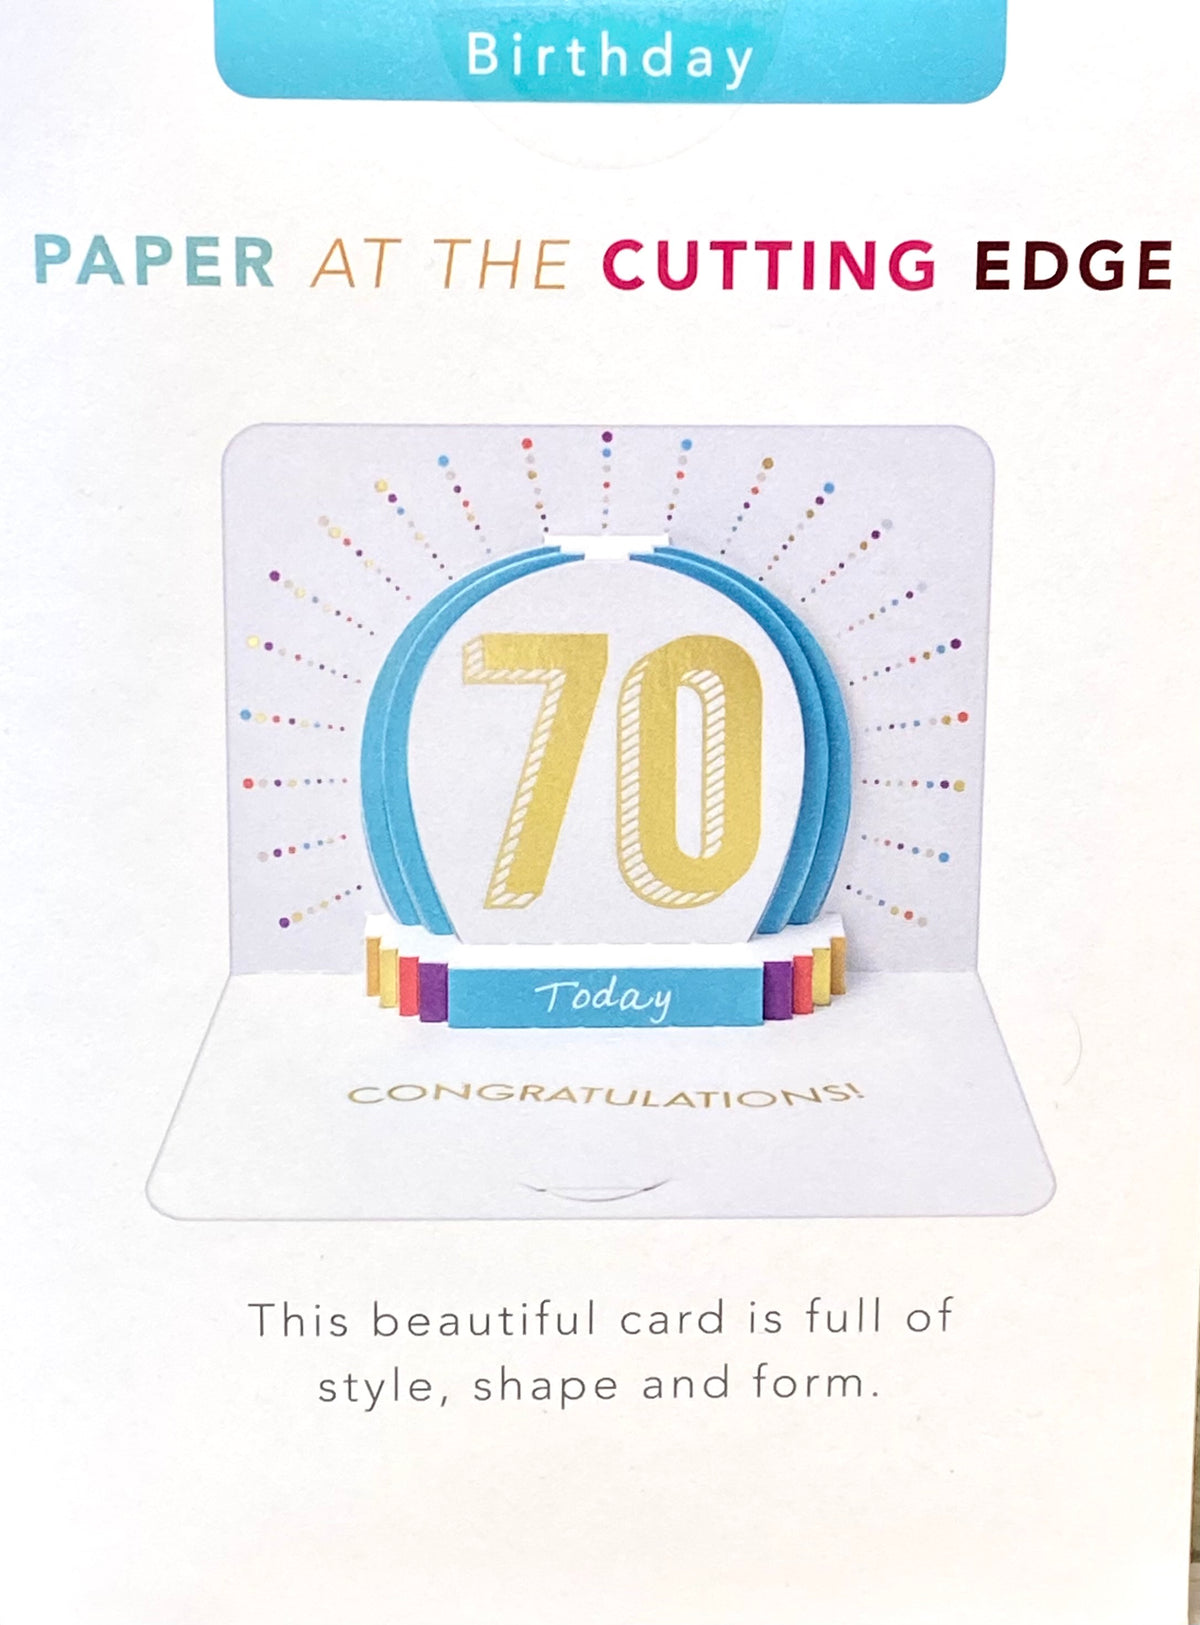 Birthday Card: 70 Today Congratulations